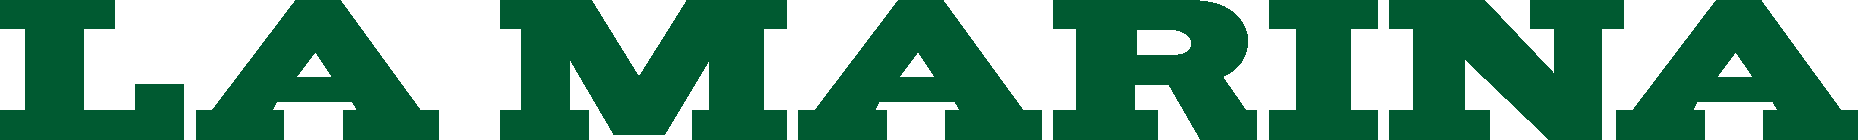 La Marina Logo Vector - (.Ai .PNG .SVG .EPS Free Download)